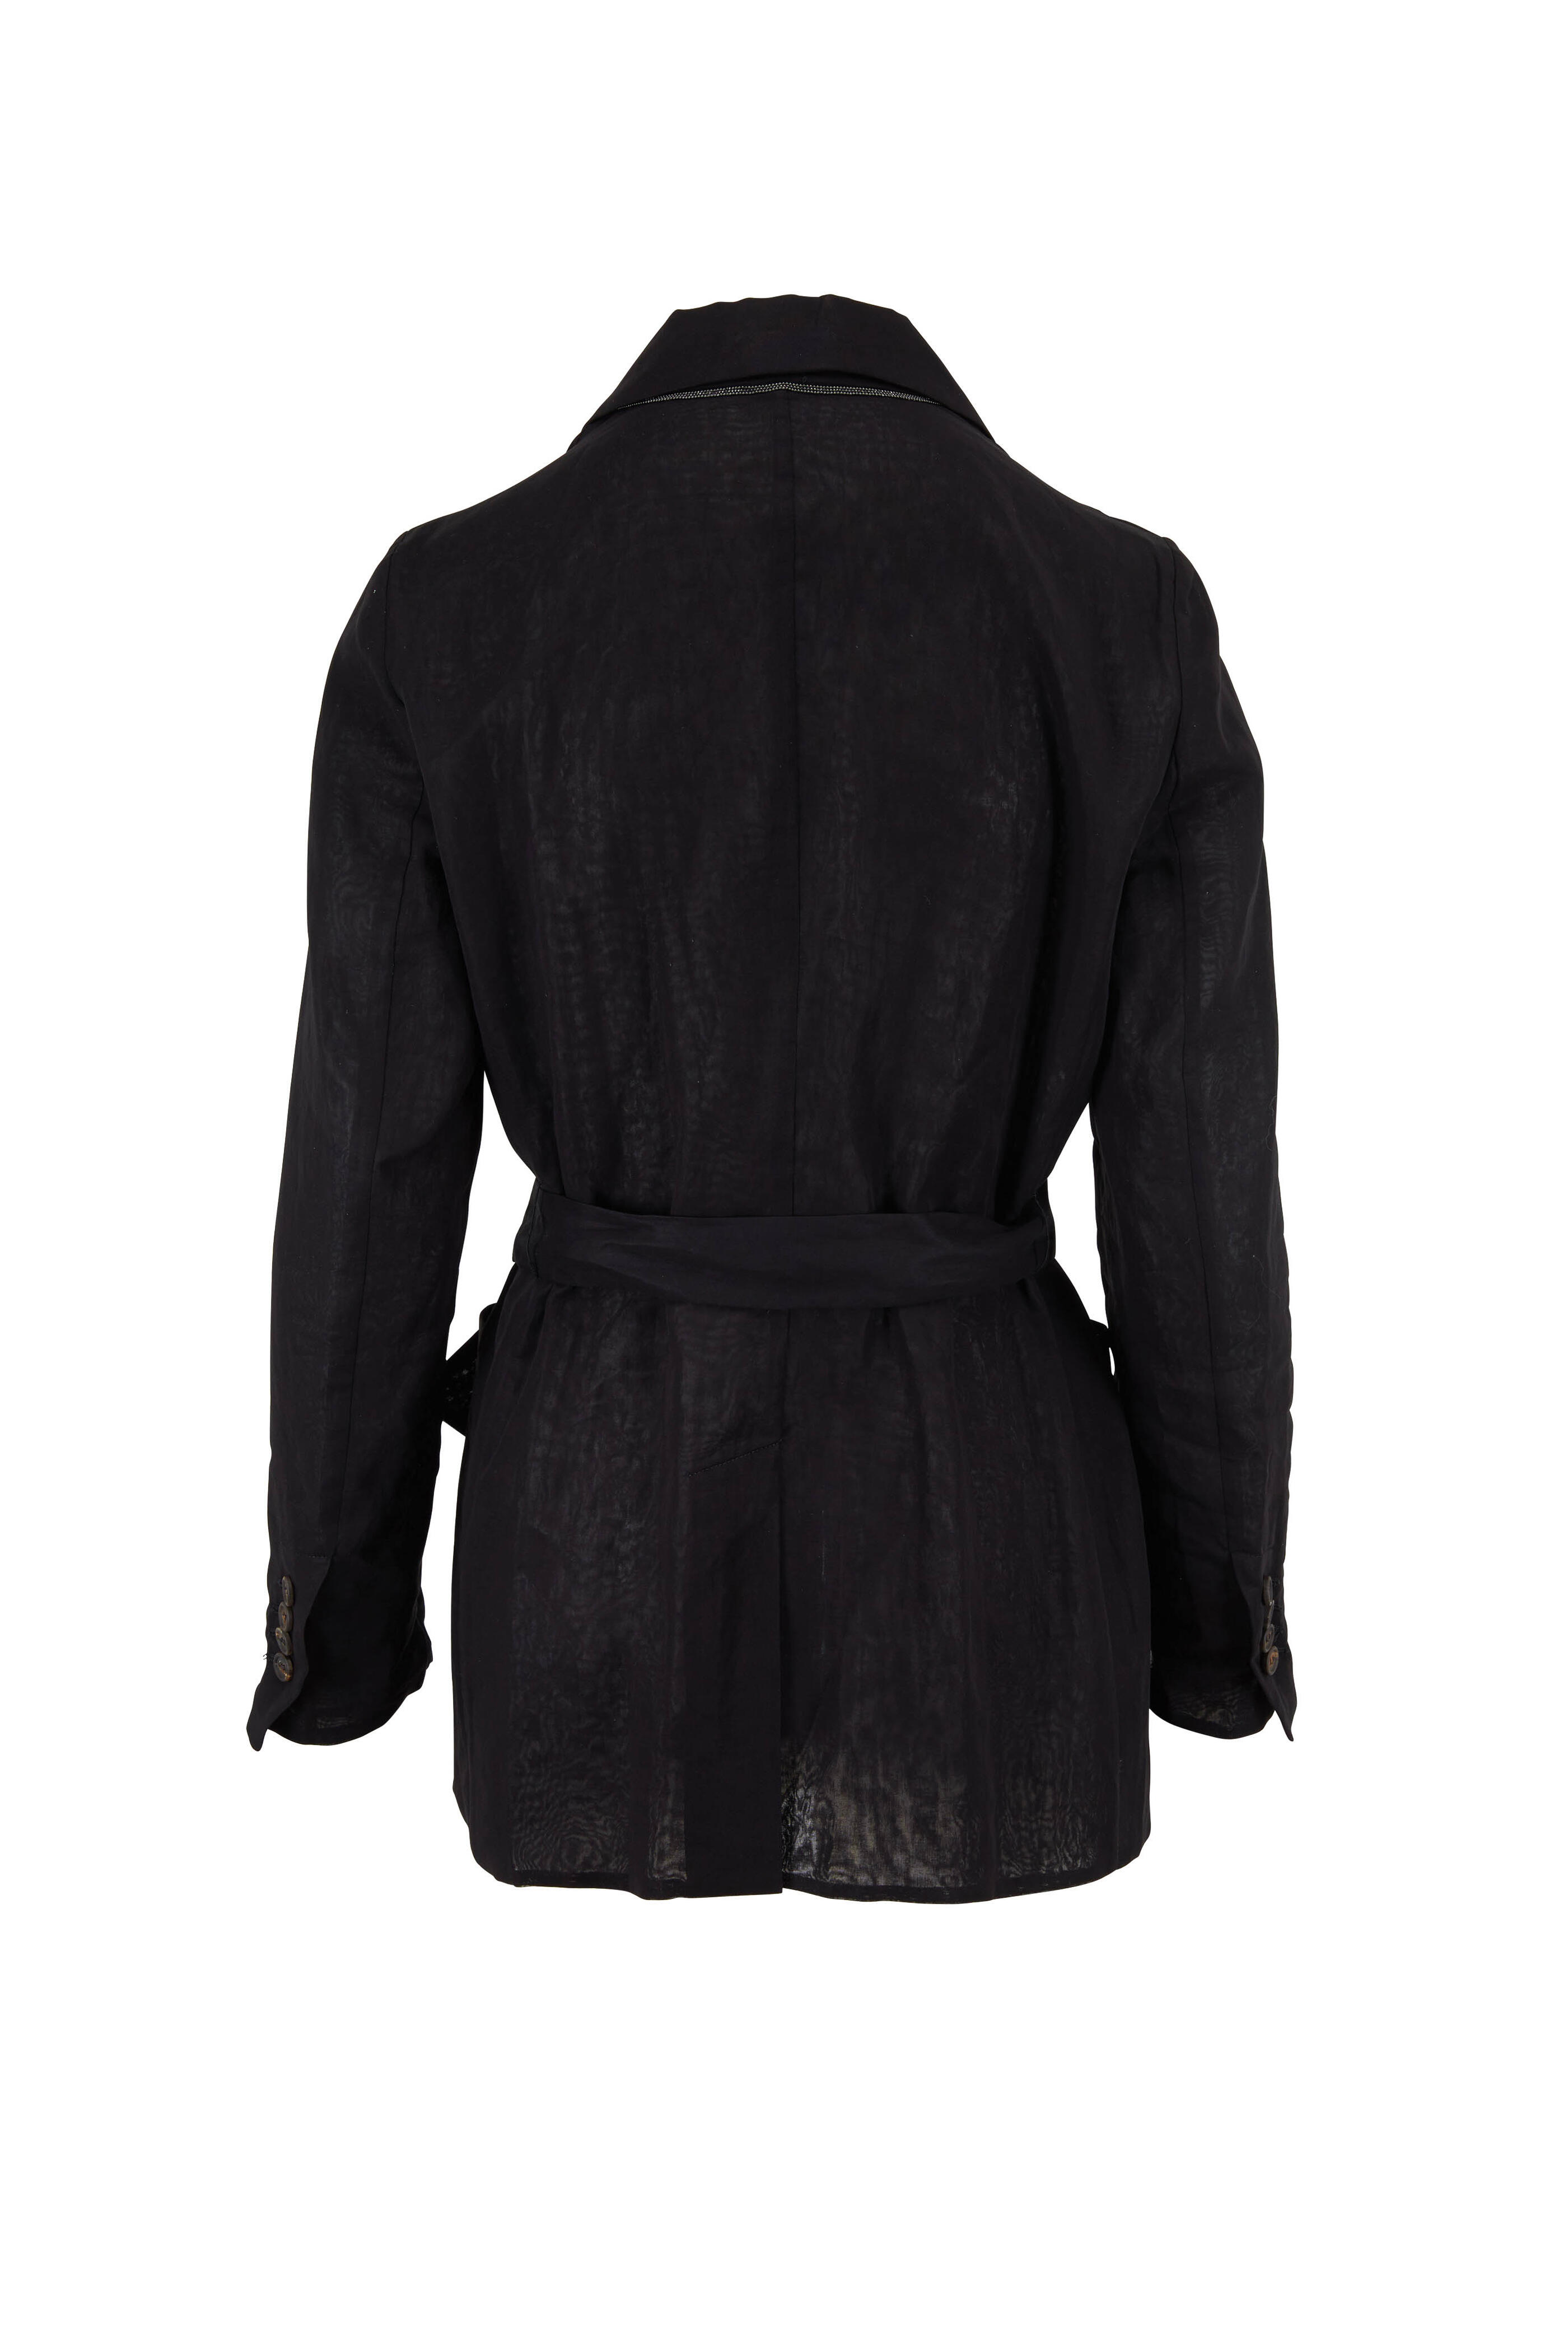 Brunello Cucinelli - Black Cotton Voile Peak Lapel Self-Tie Jacket